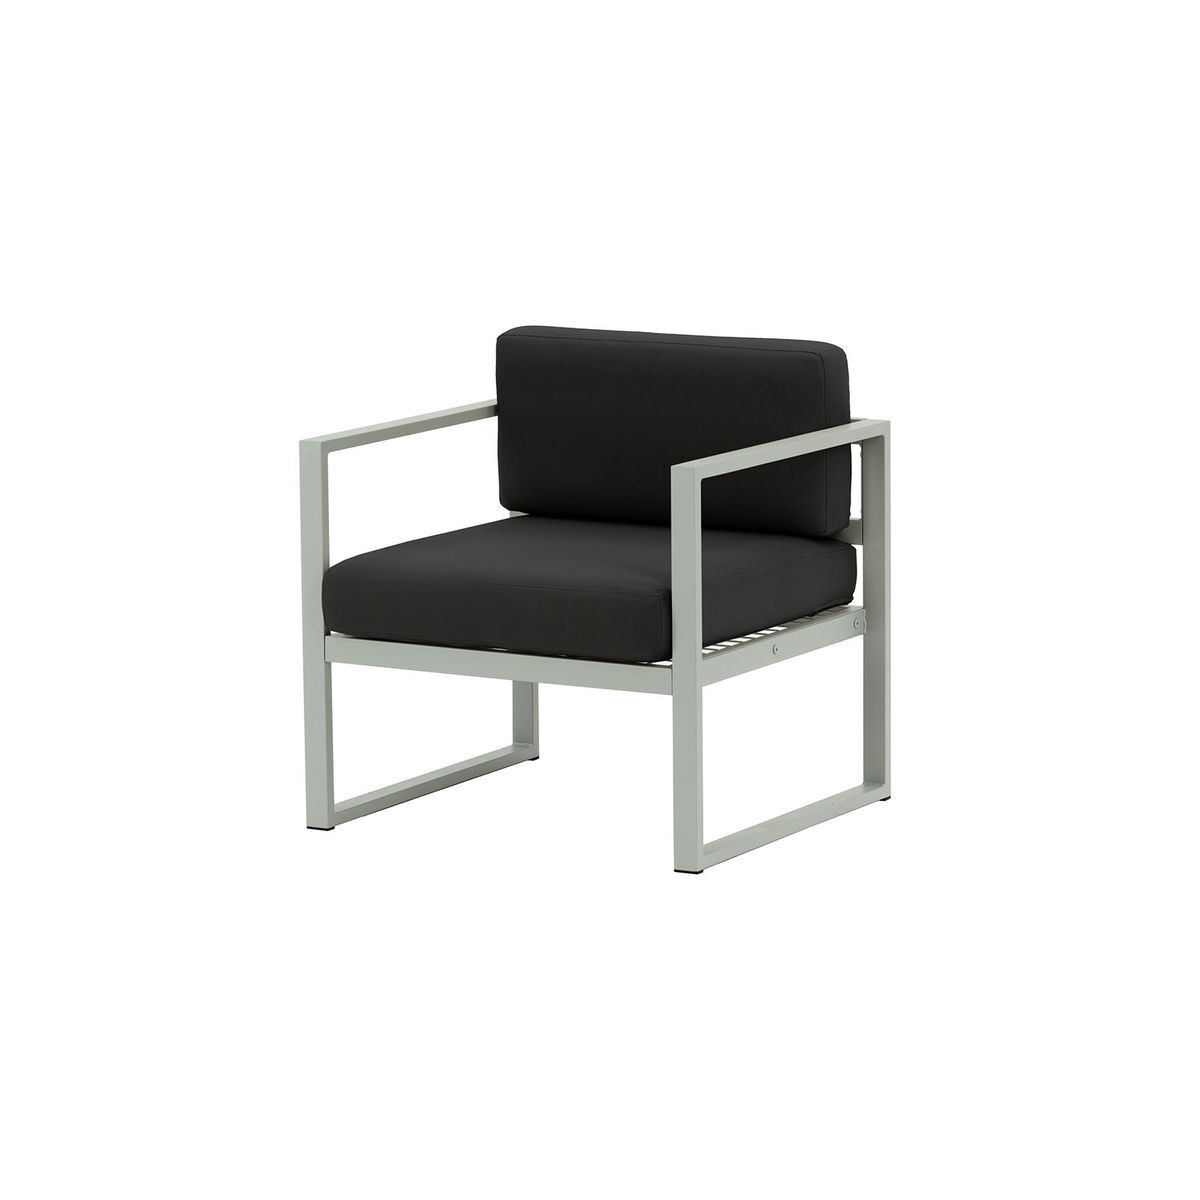 Sunset Garden Armchair, black, Leg colour: grey steel - image 1